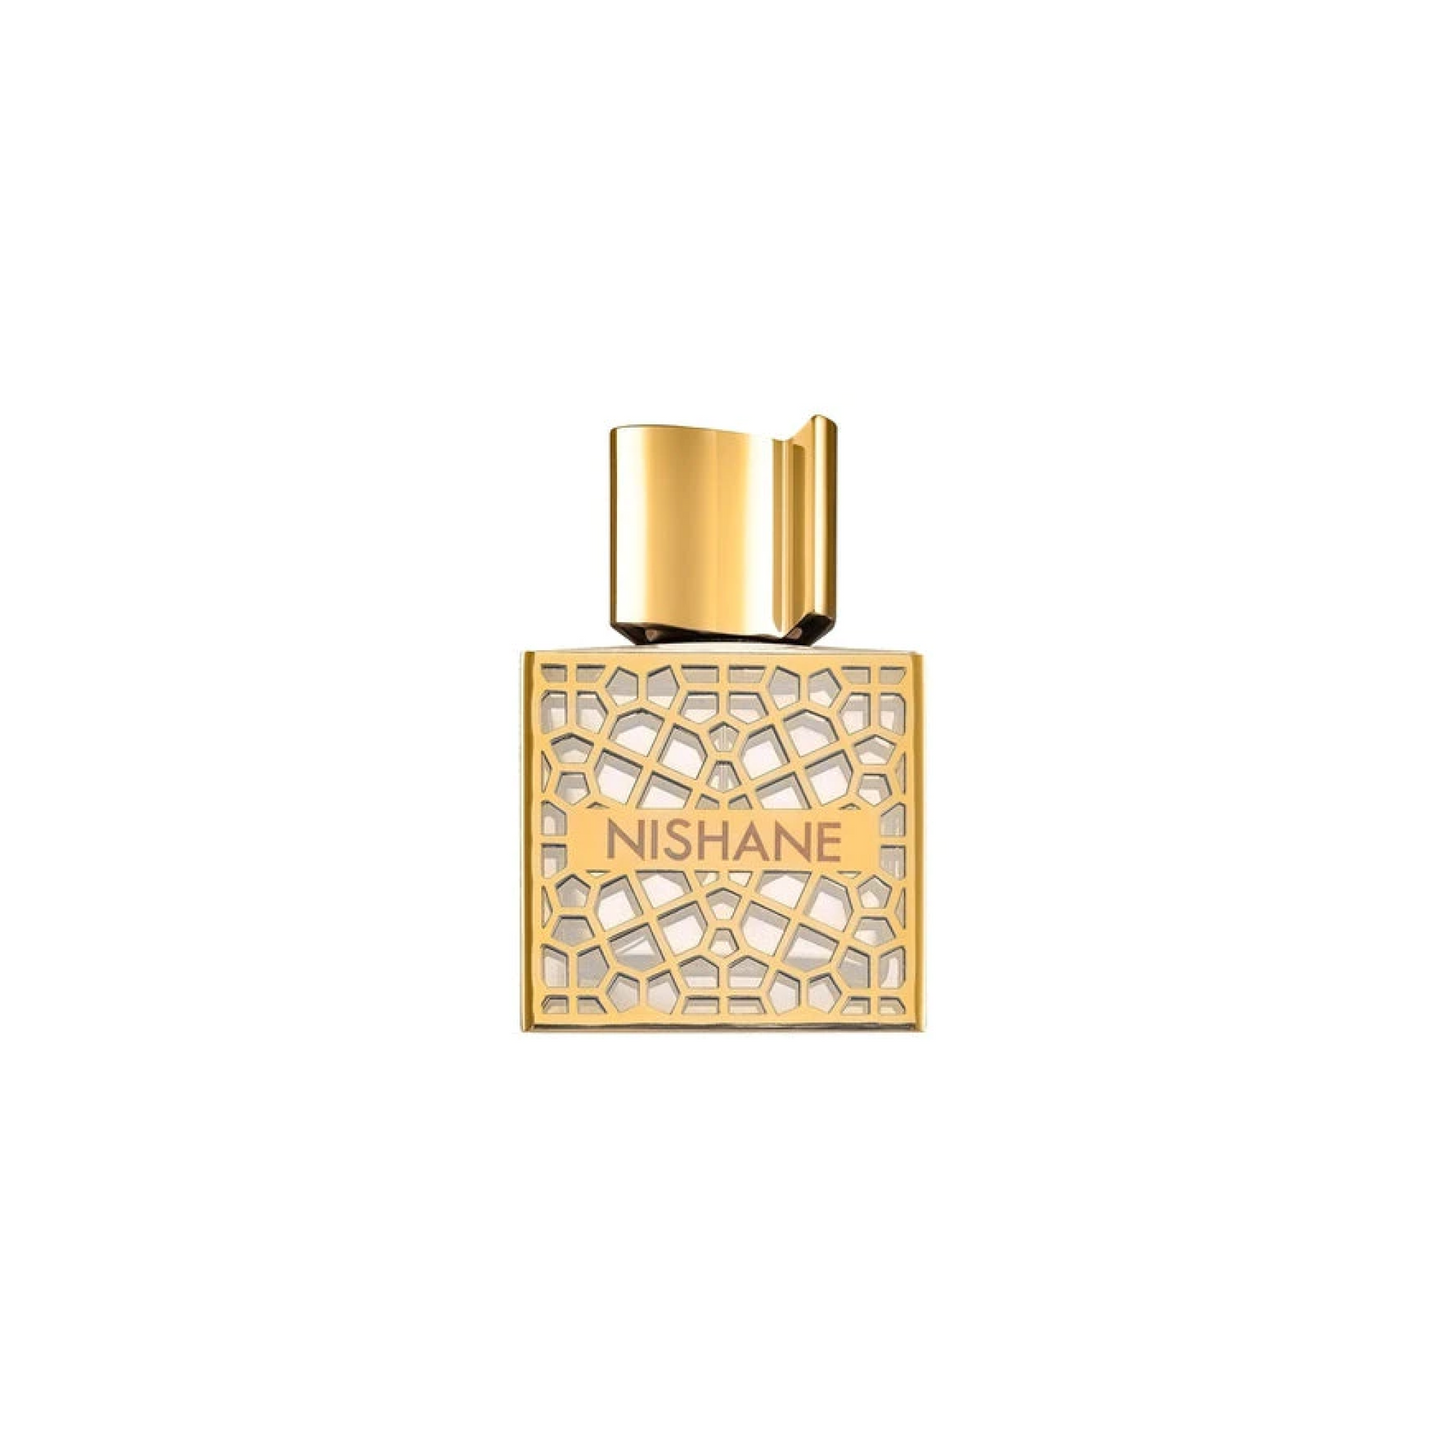 Nishane Nefs Extrait de Parfum - 1.7 oz.